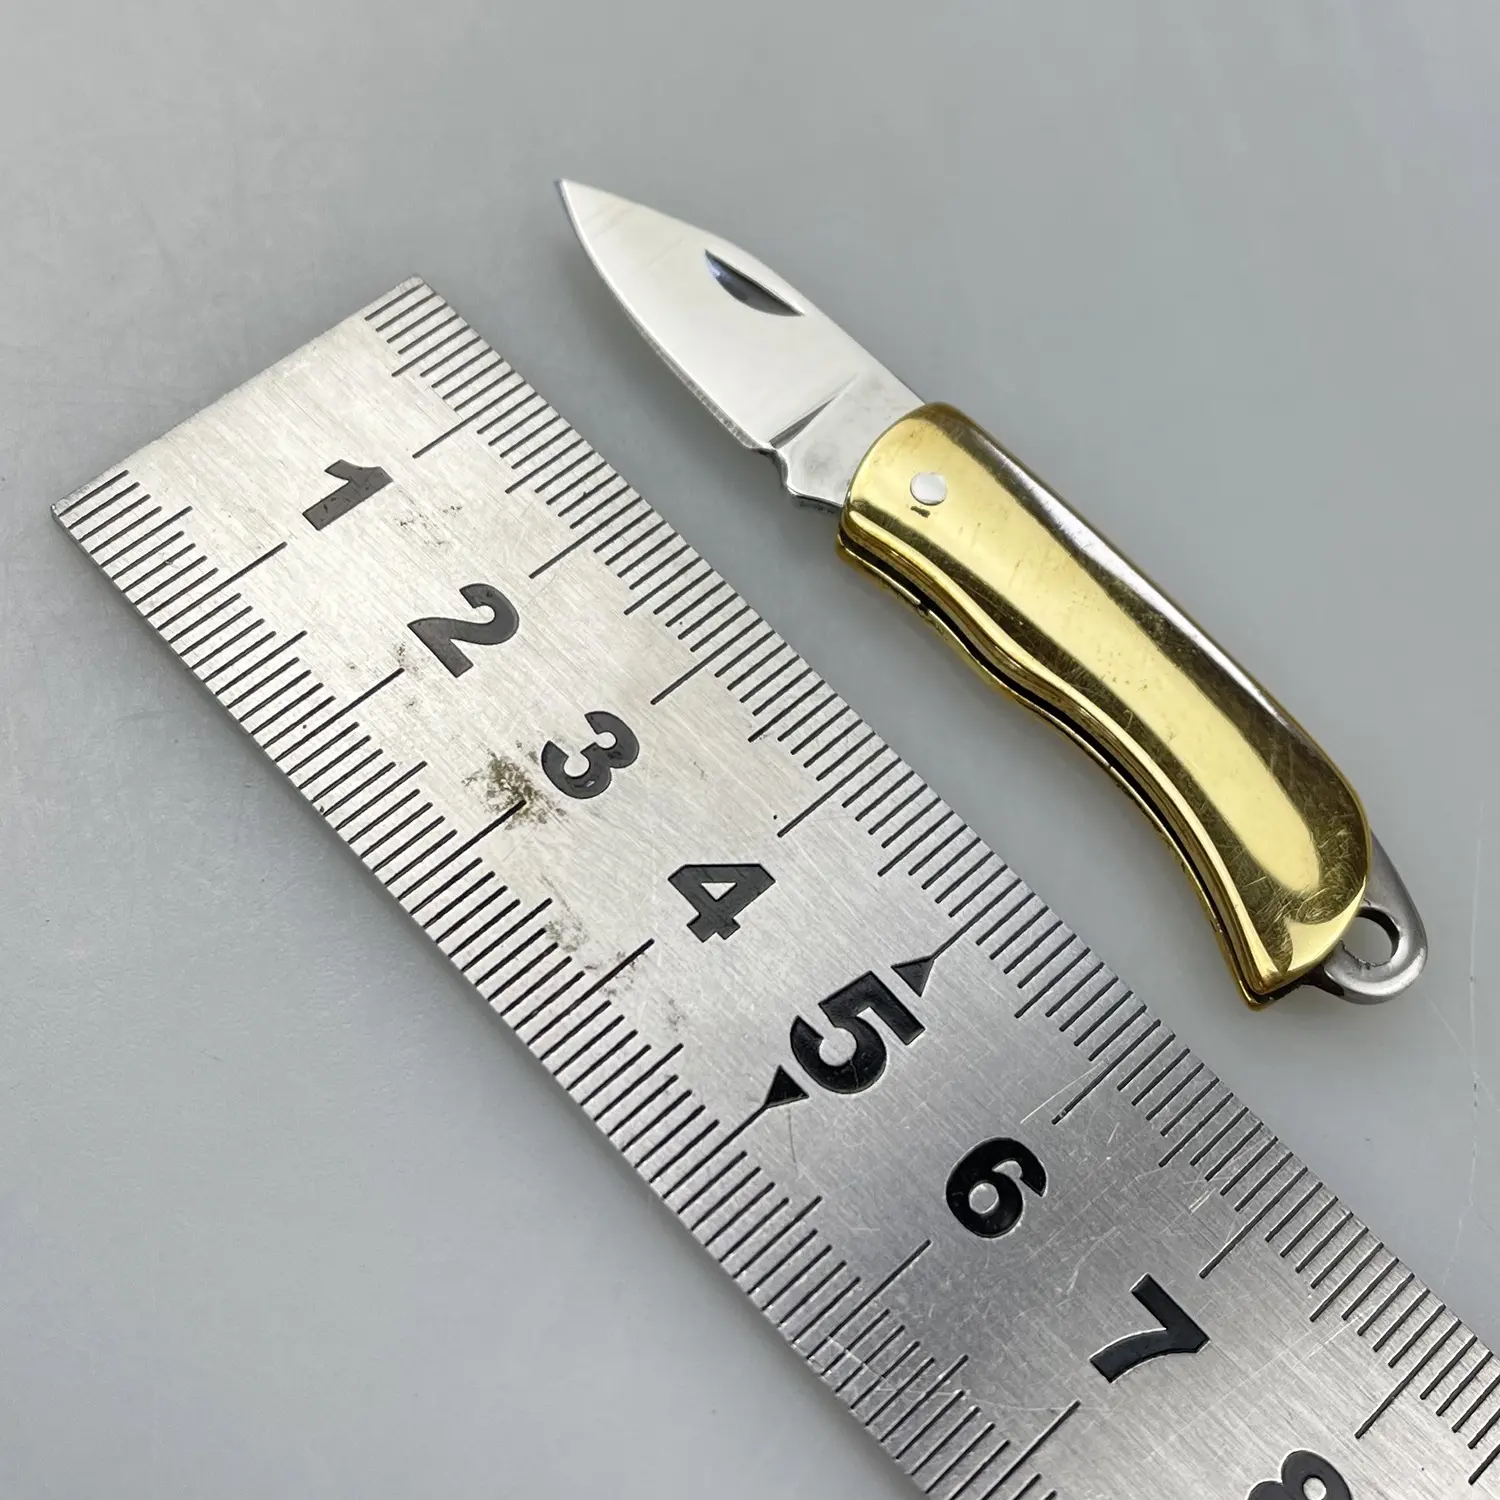 Amazon Top Seller Metal Key Survival Portable Knife Mini Pocket knives Self Defense Key chain with Copper handle